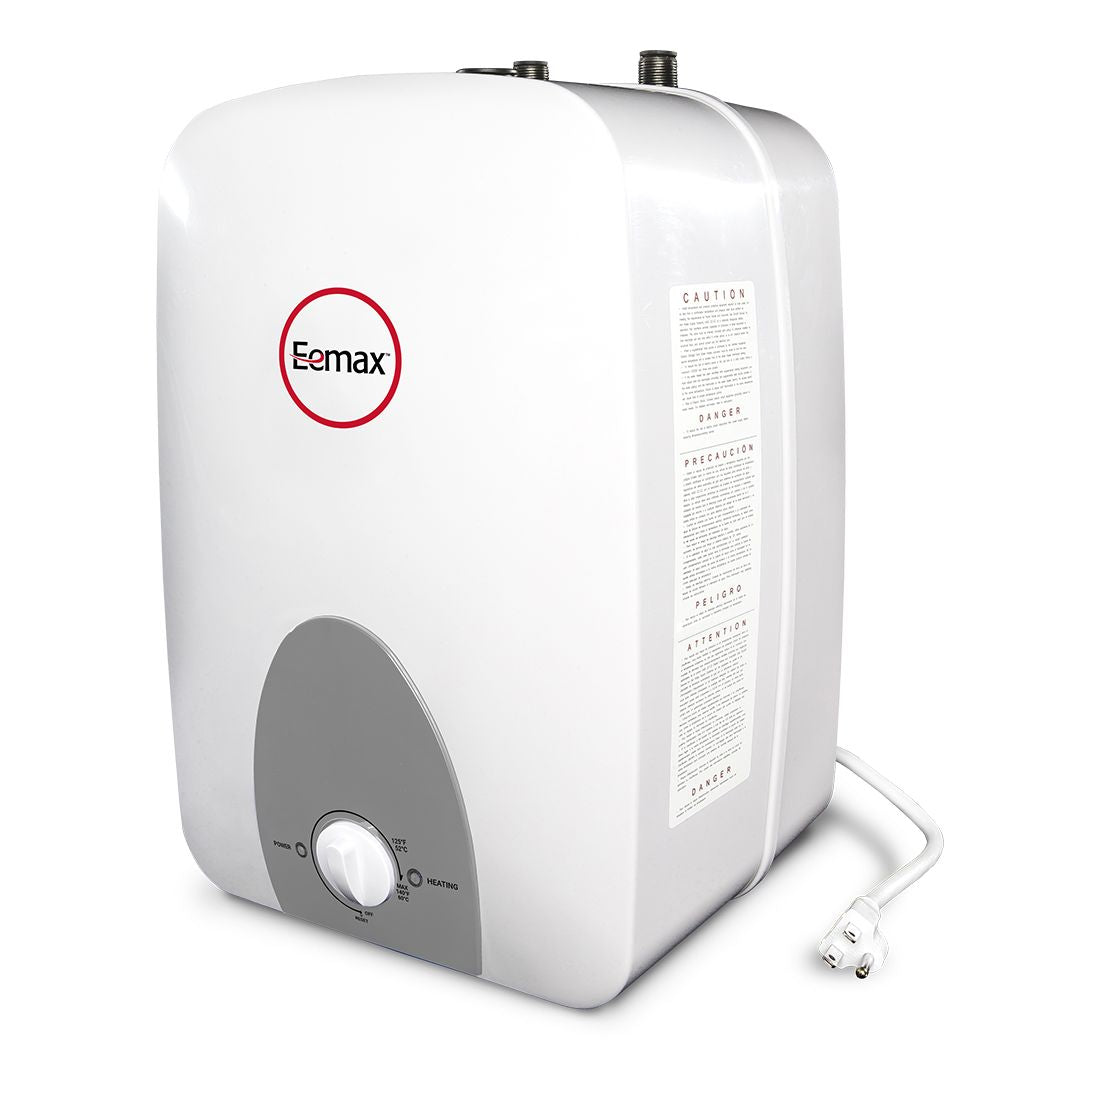 EMT6 - MiniTank Electric Mini Tank Water Heater, 6 Gallons